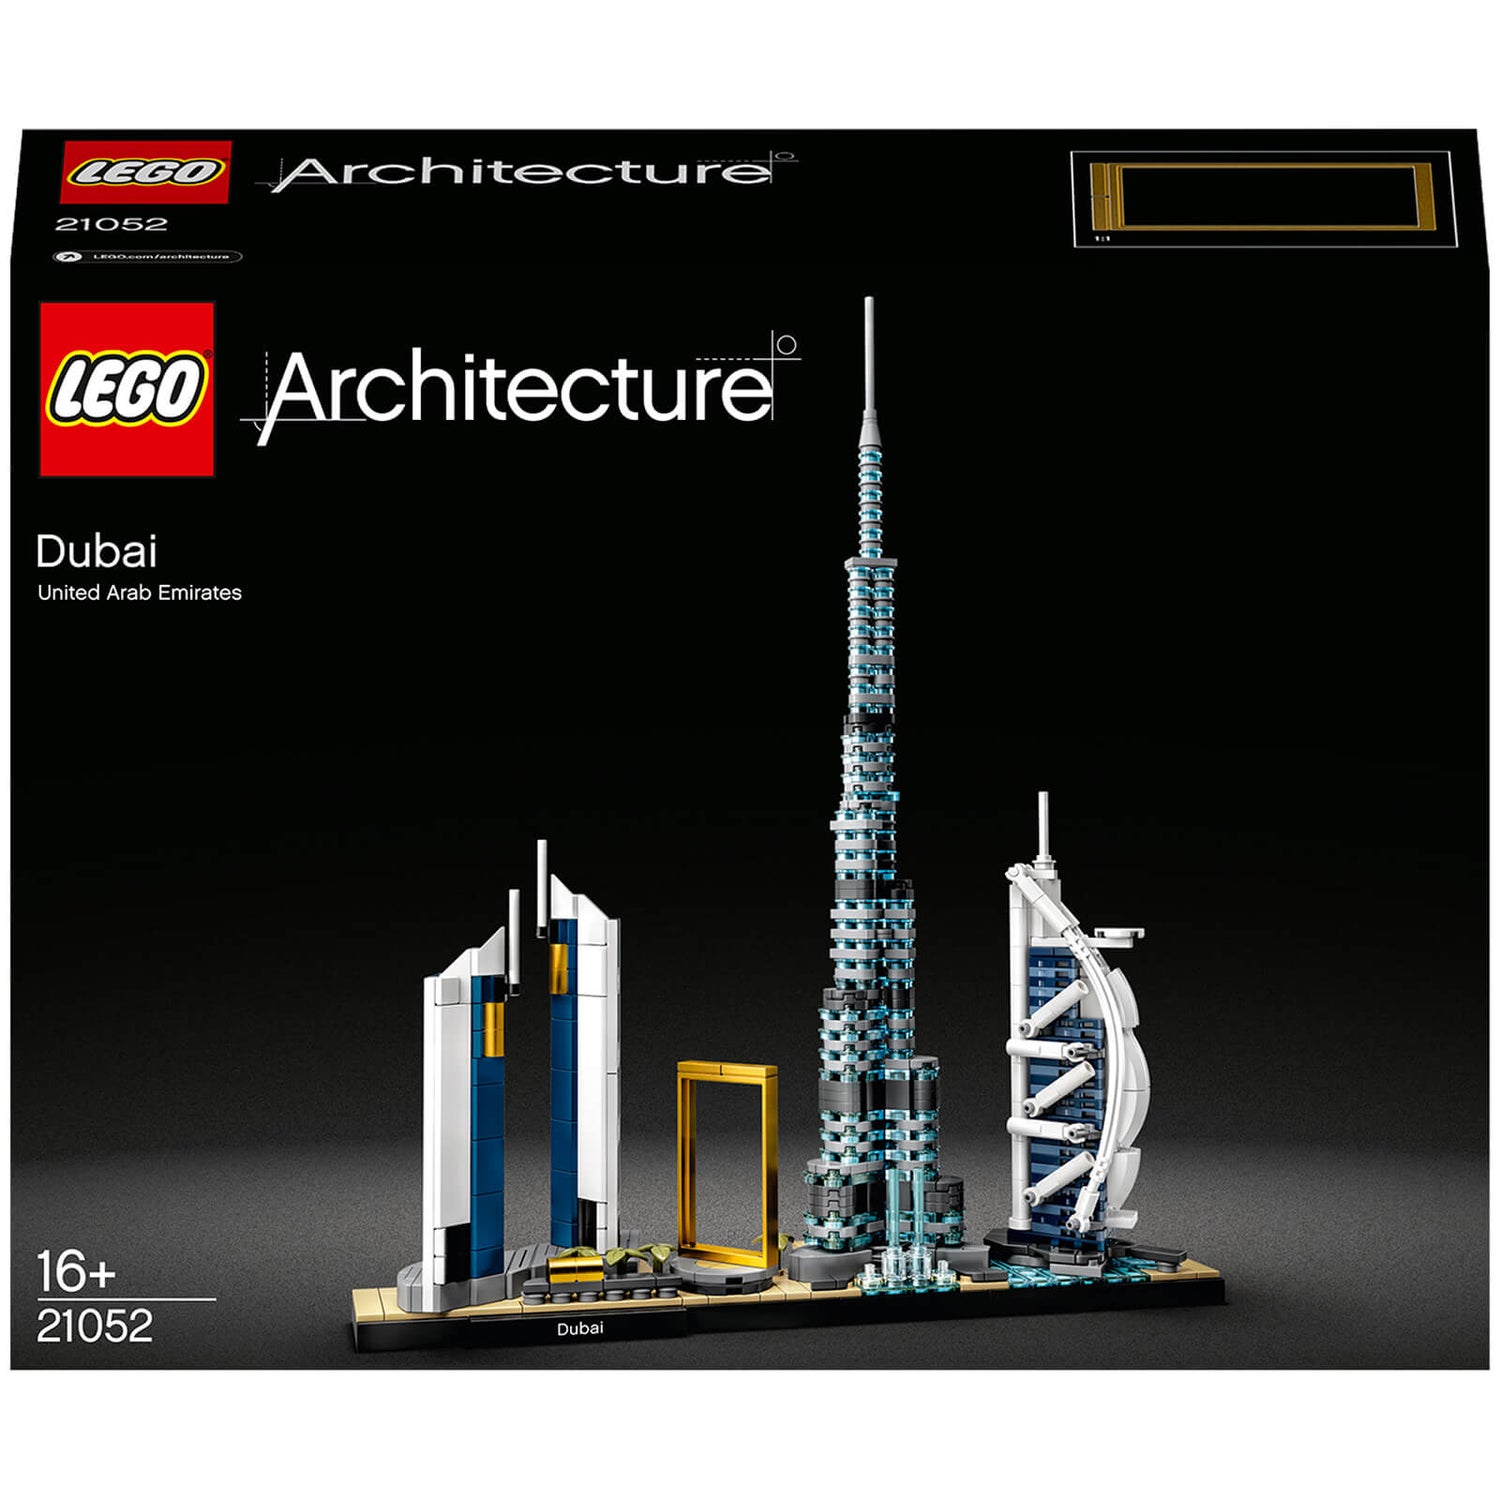 21052 for sale online LEGO Dubai LEGO Architecture 